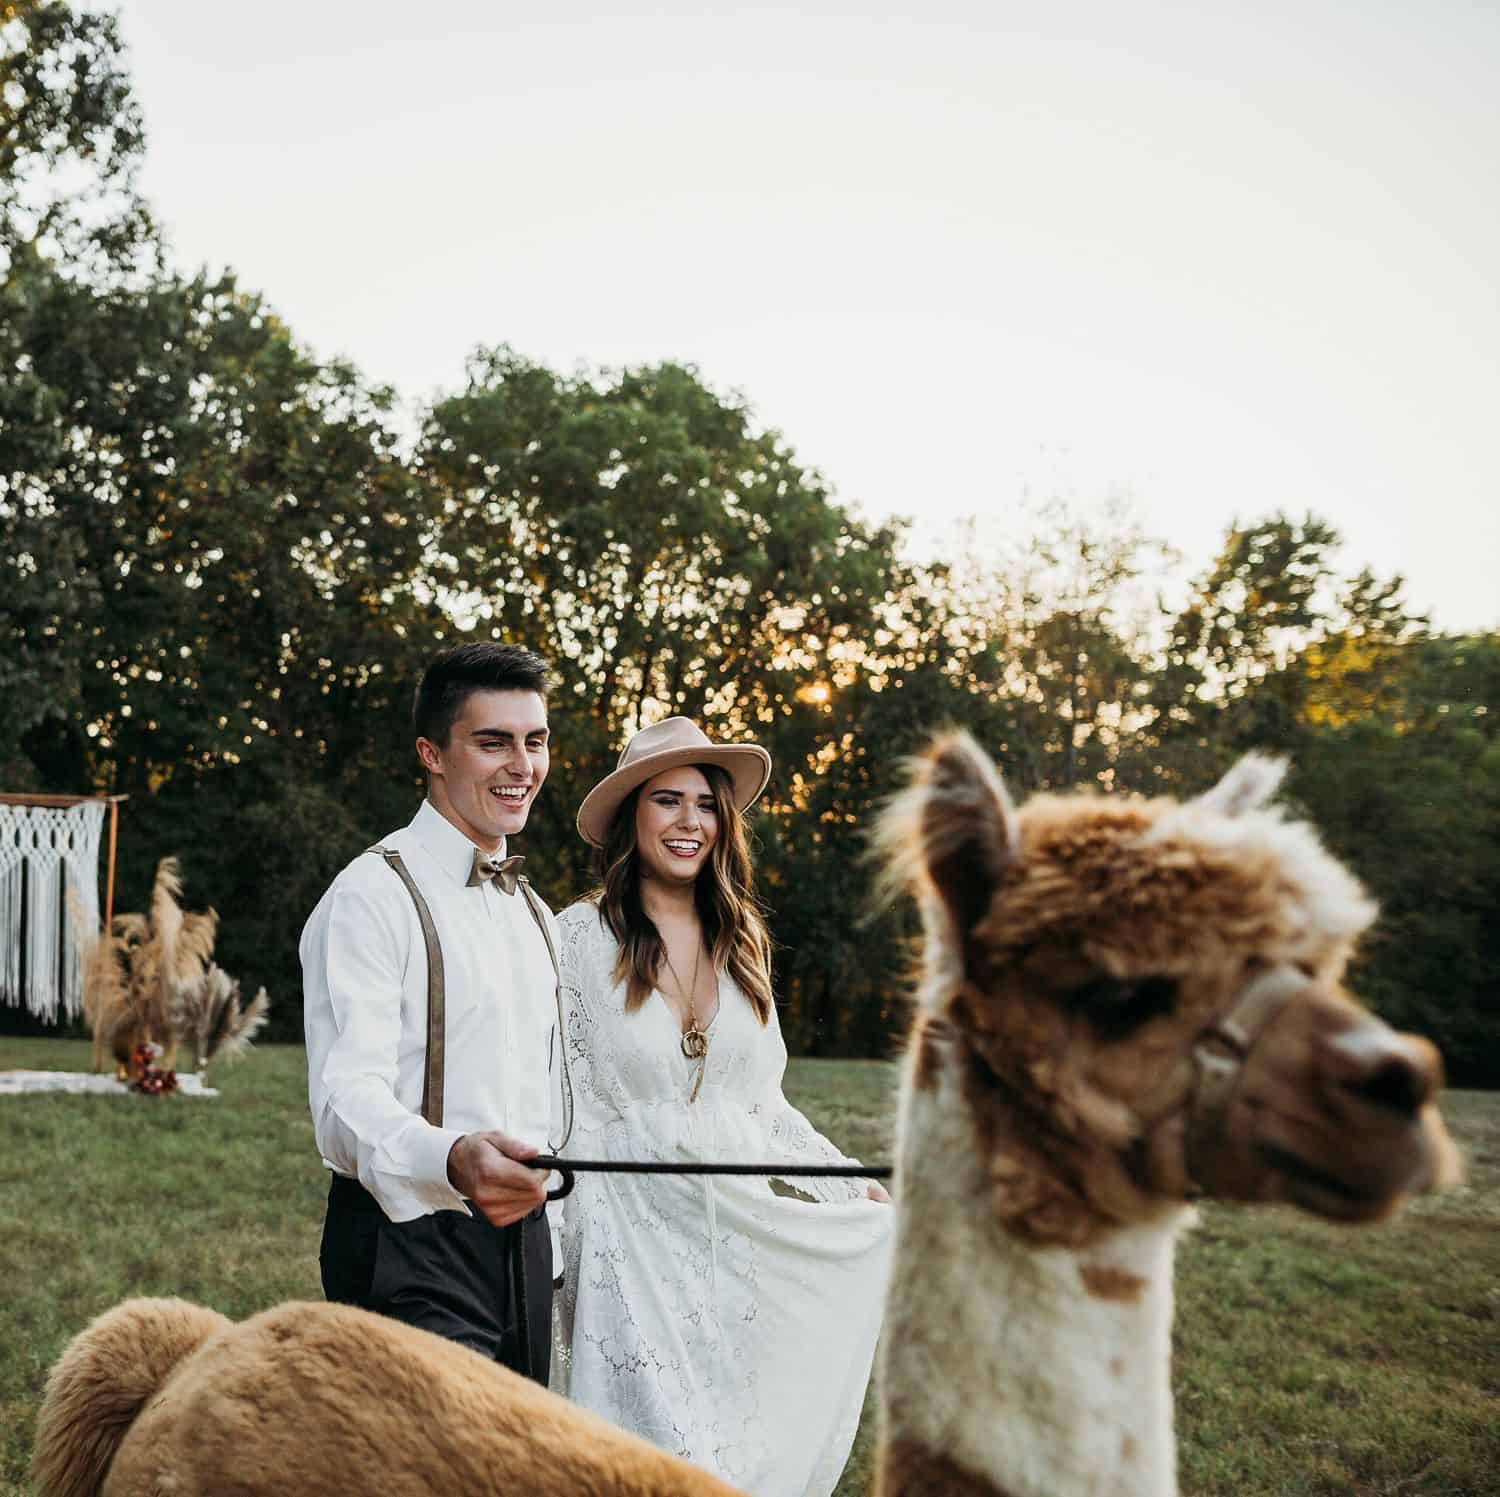 A boho bride and groom walk through a field with an alpaca on a leash